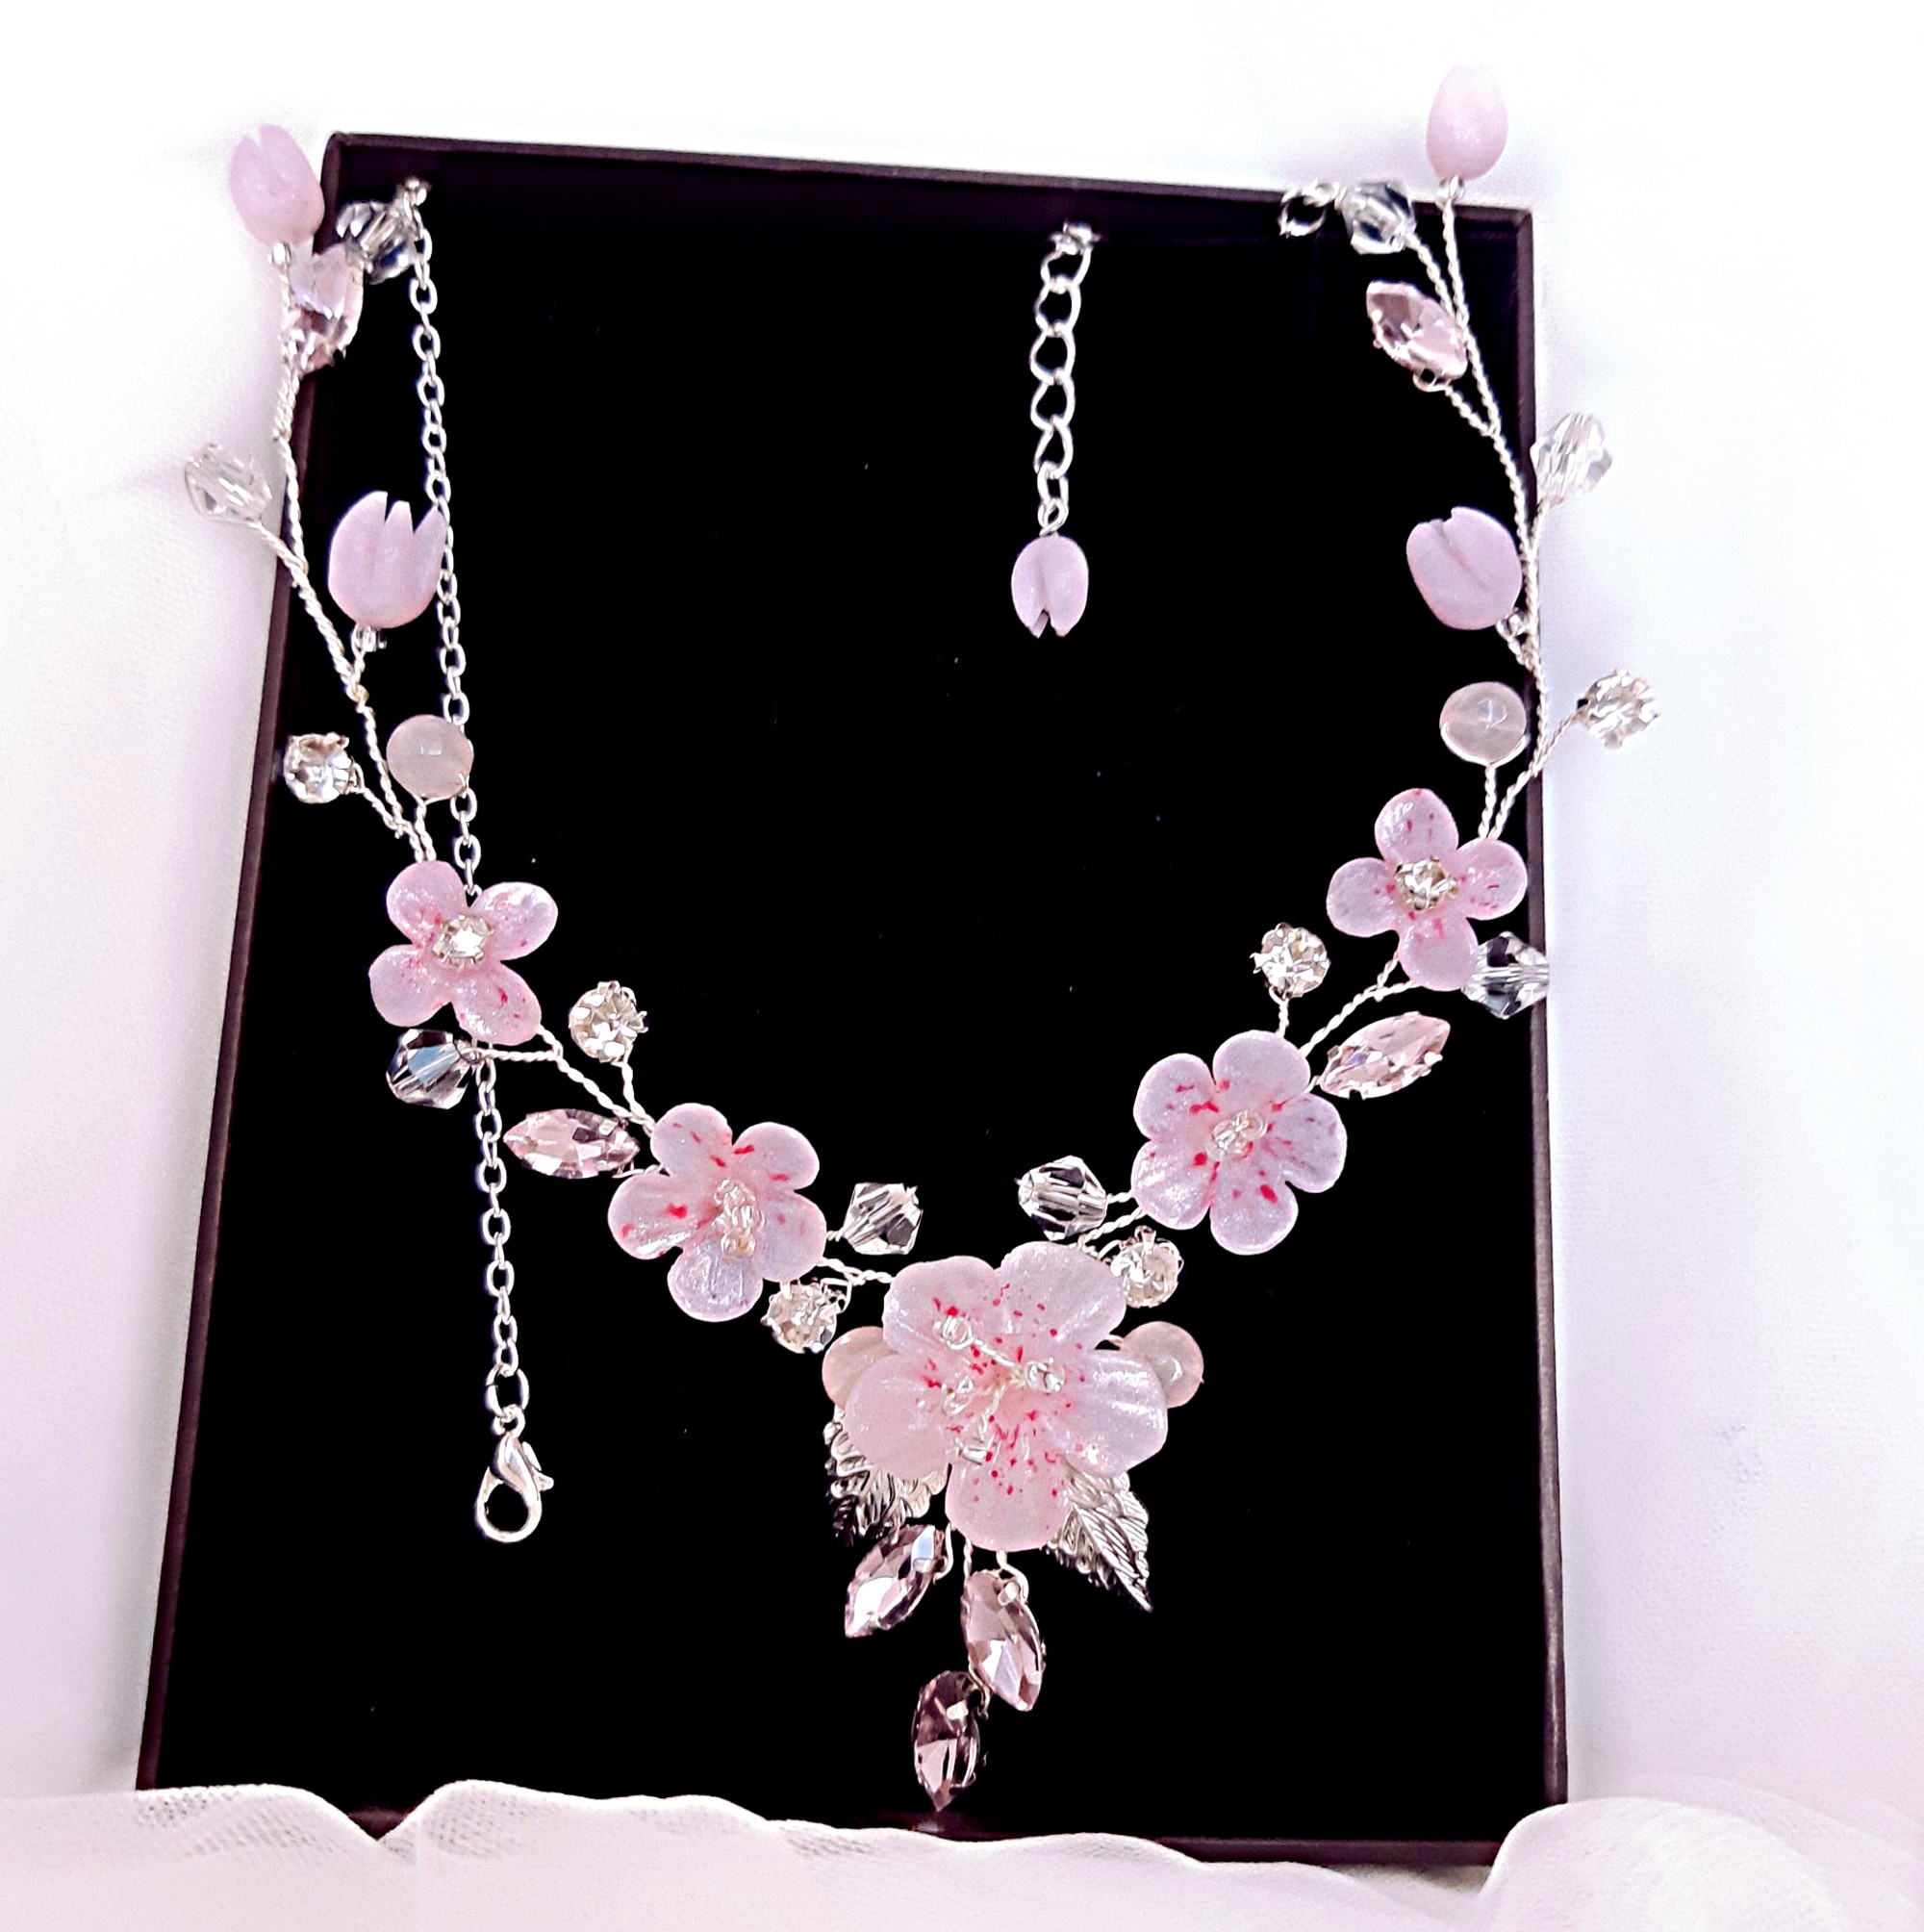 50pcs Cherry Blossom Pendant Enamel Flower Charms Jewelry Making Accessories for DIY Necklace Bracelet,14 * 17mm,5 Colors